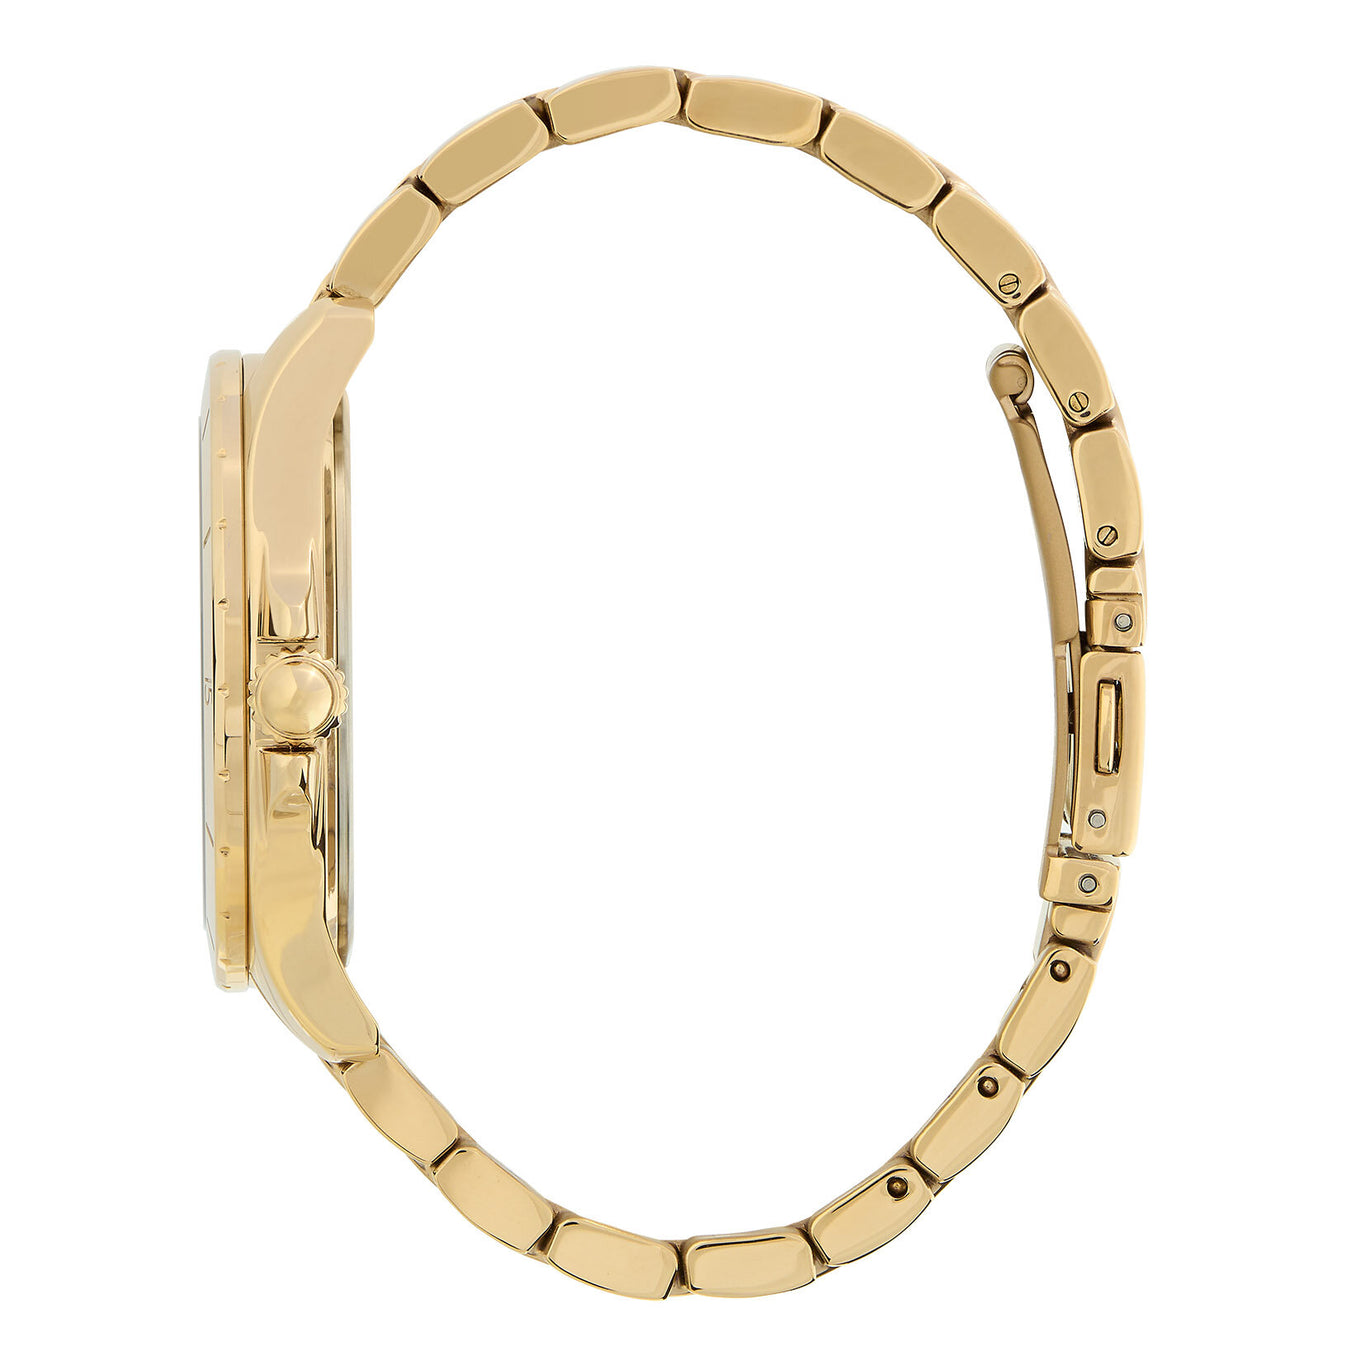 Olivia Burton Guilloche Champagne & Gold Bracelet watch